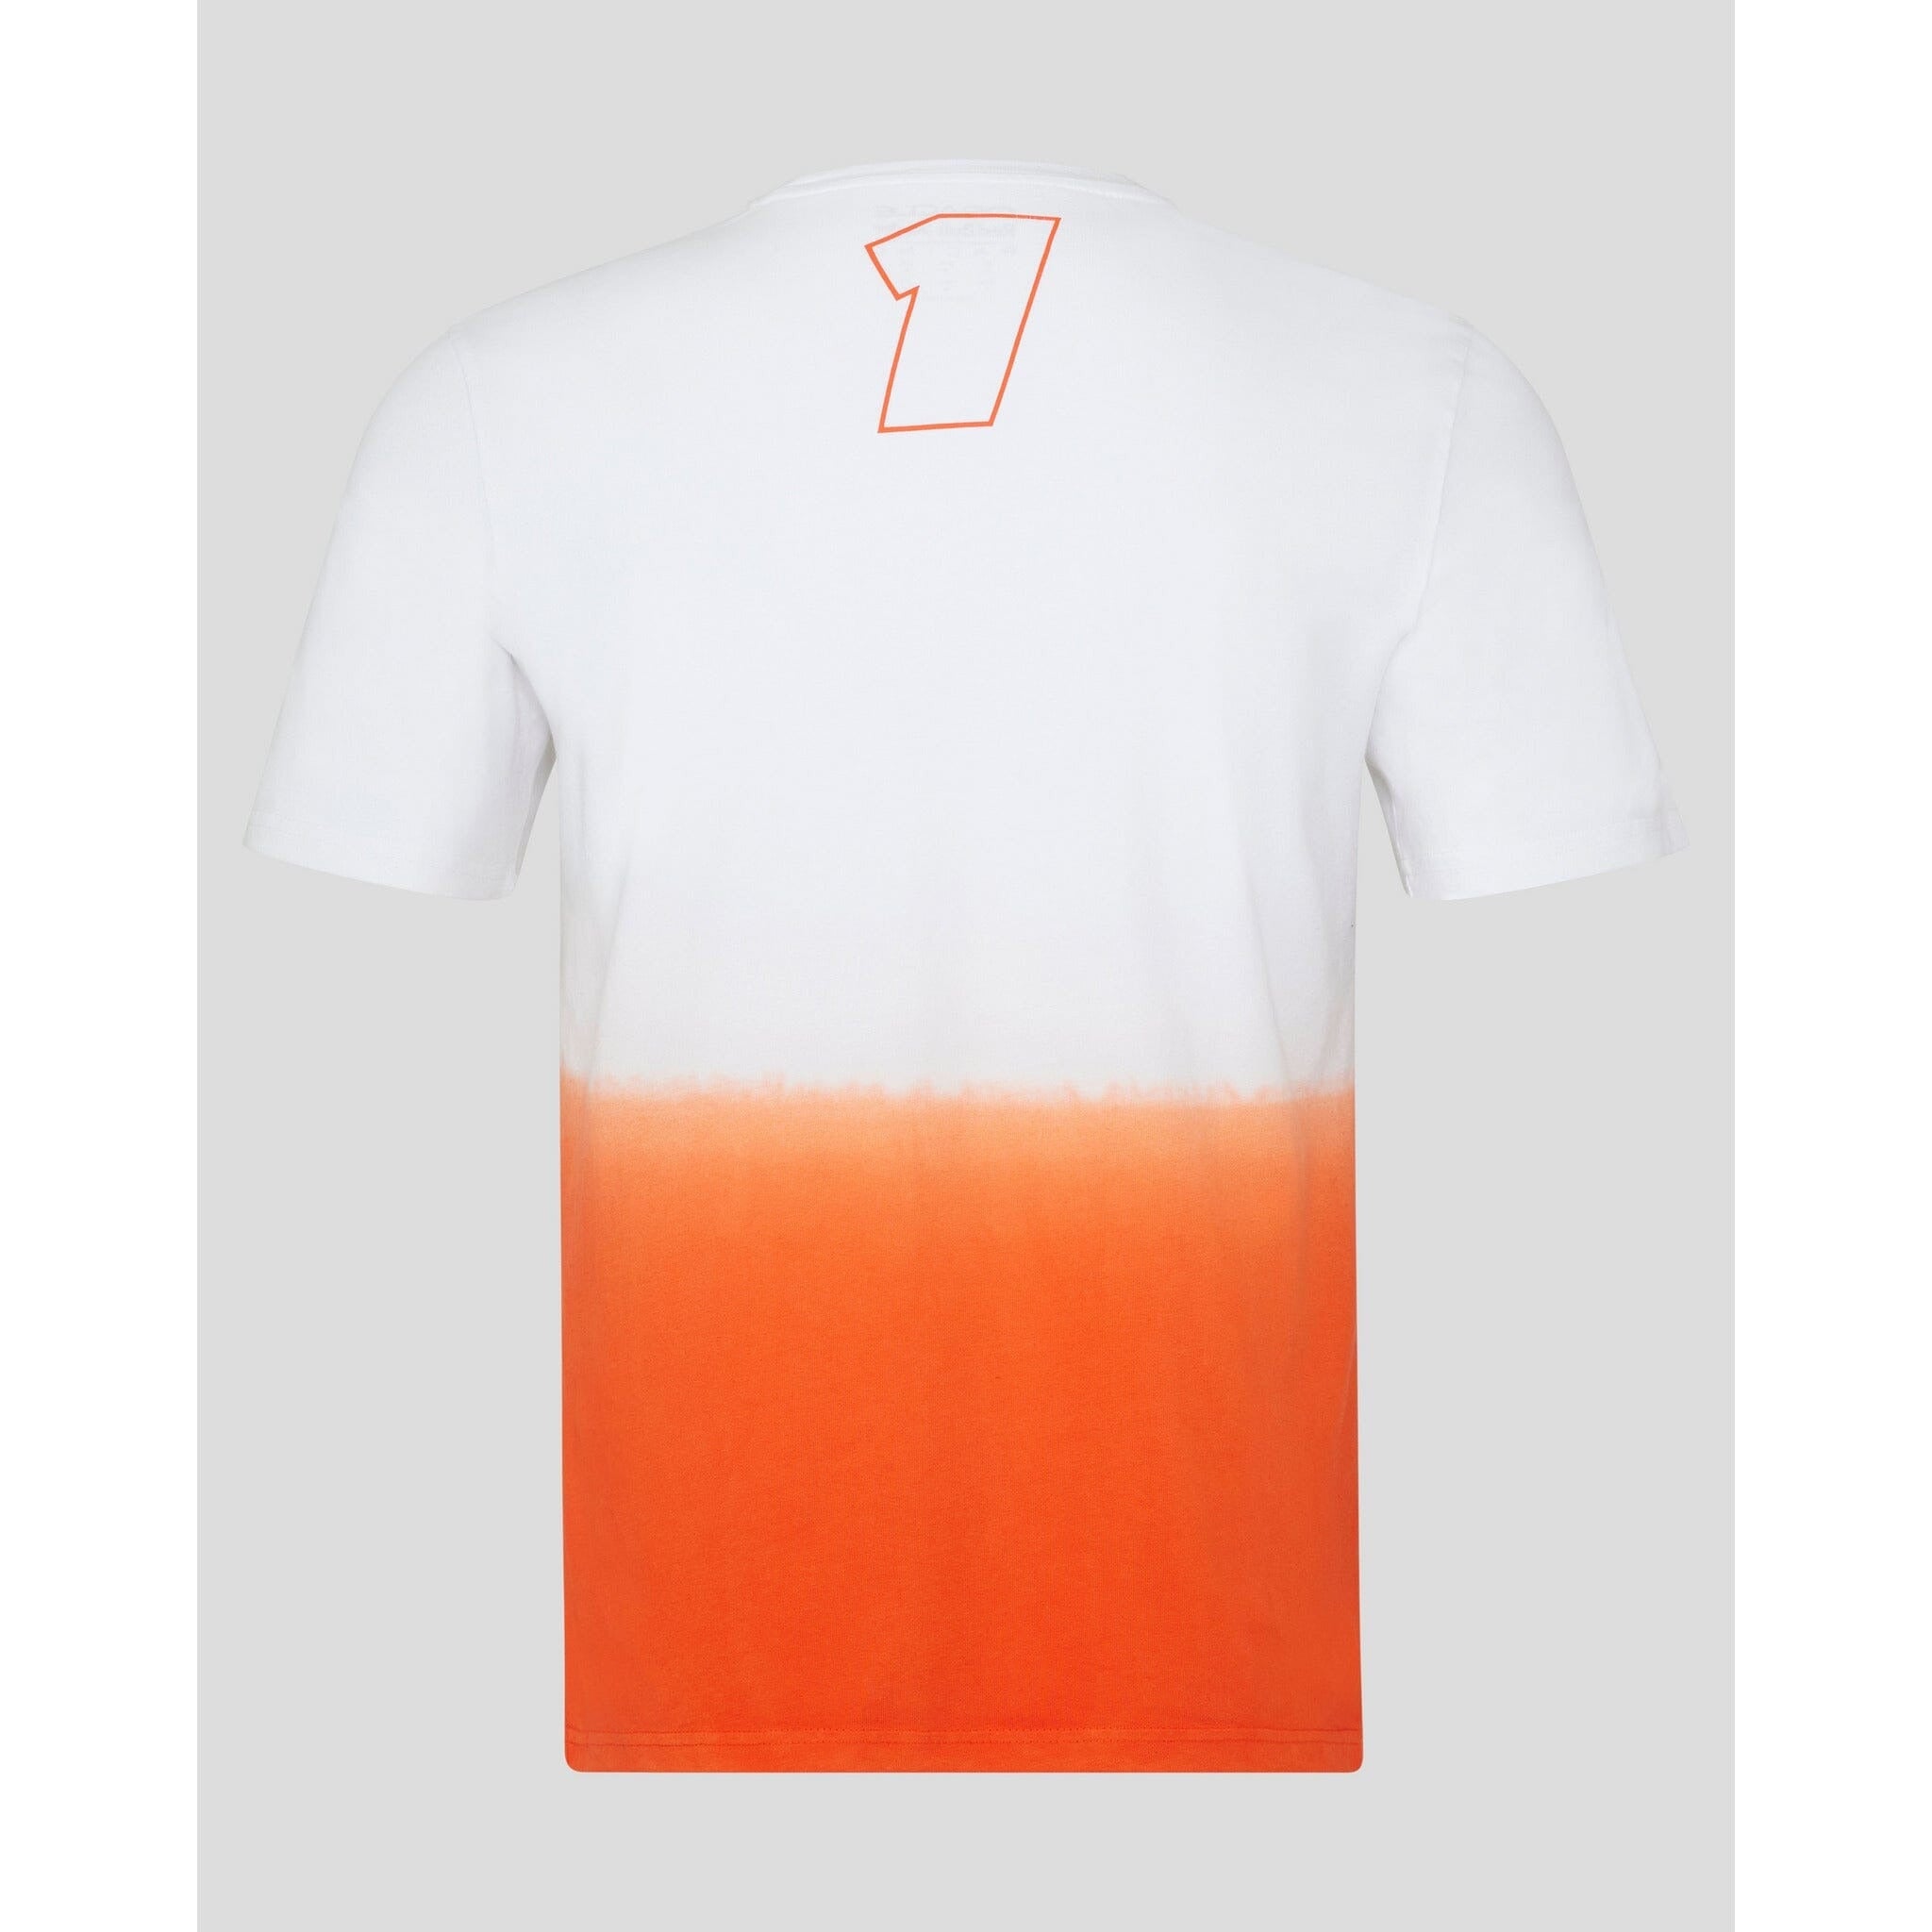 Red Bull Racing F1 Max Verstappen Driver T-Shirt - Exotic Orange/White